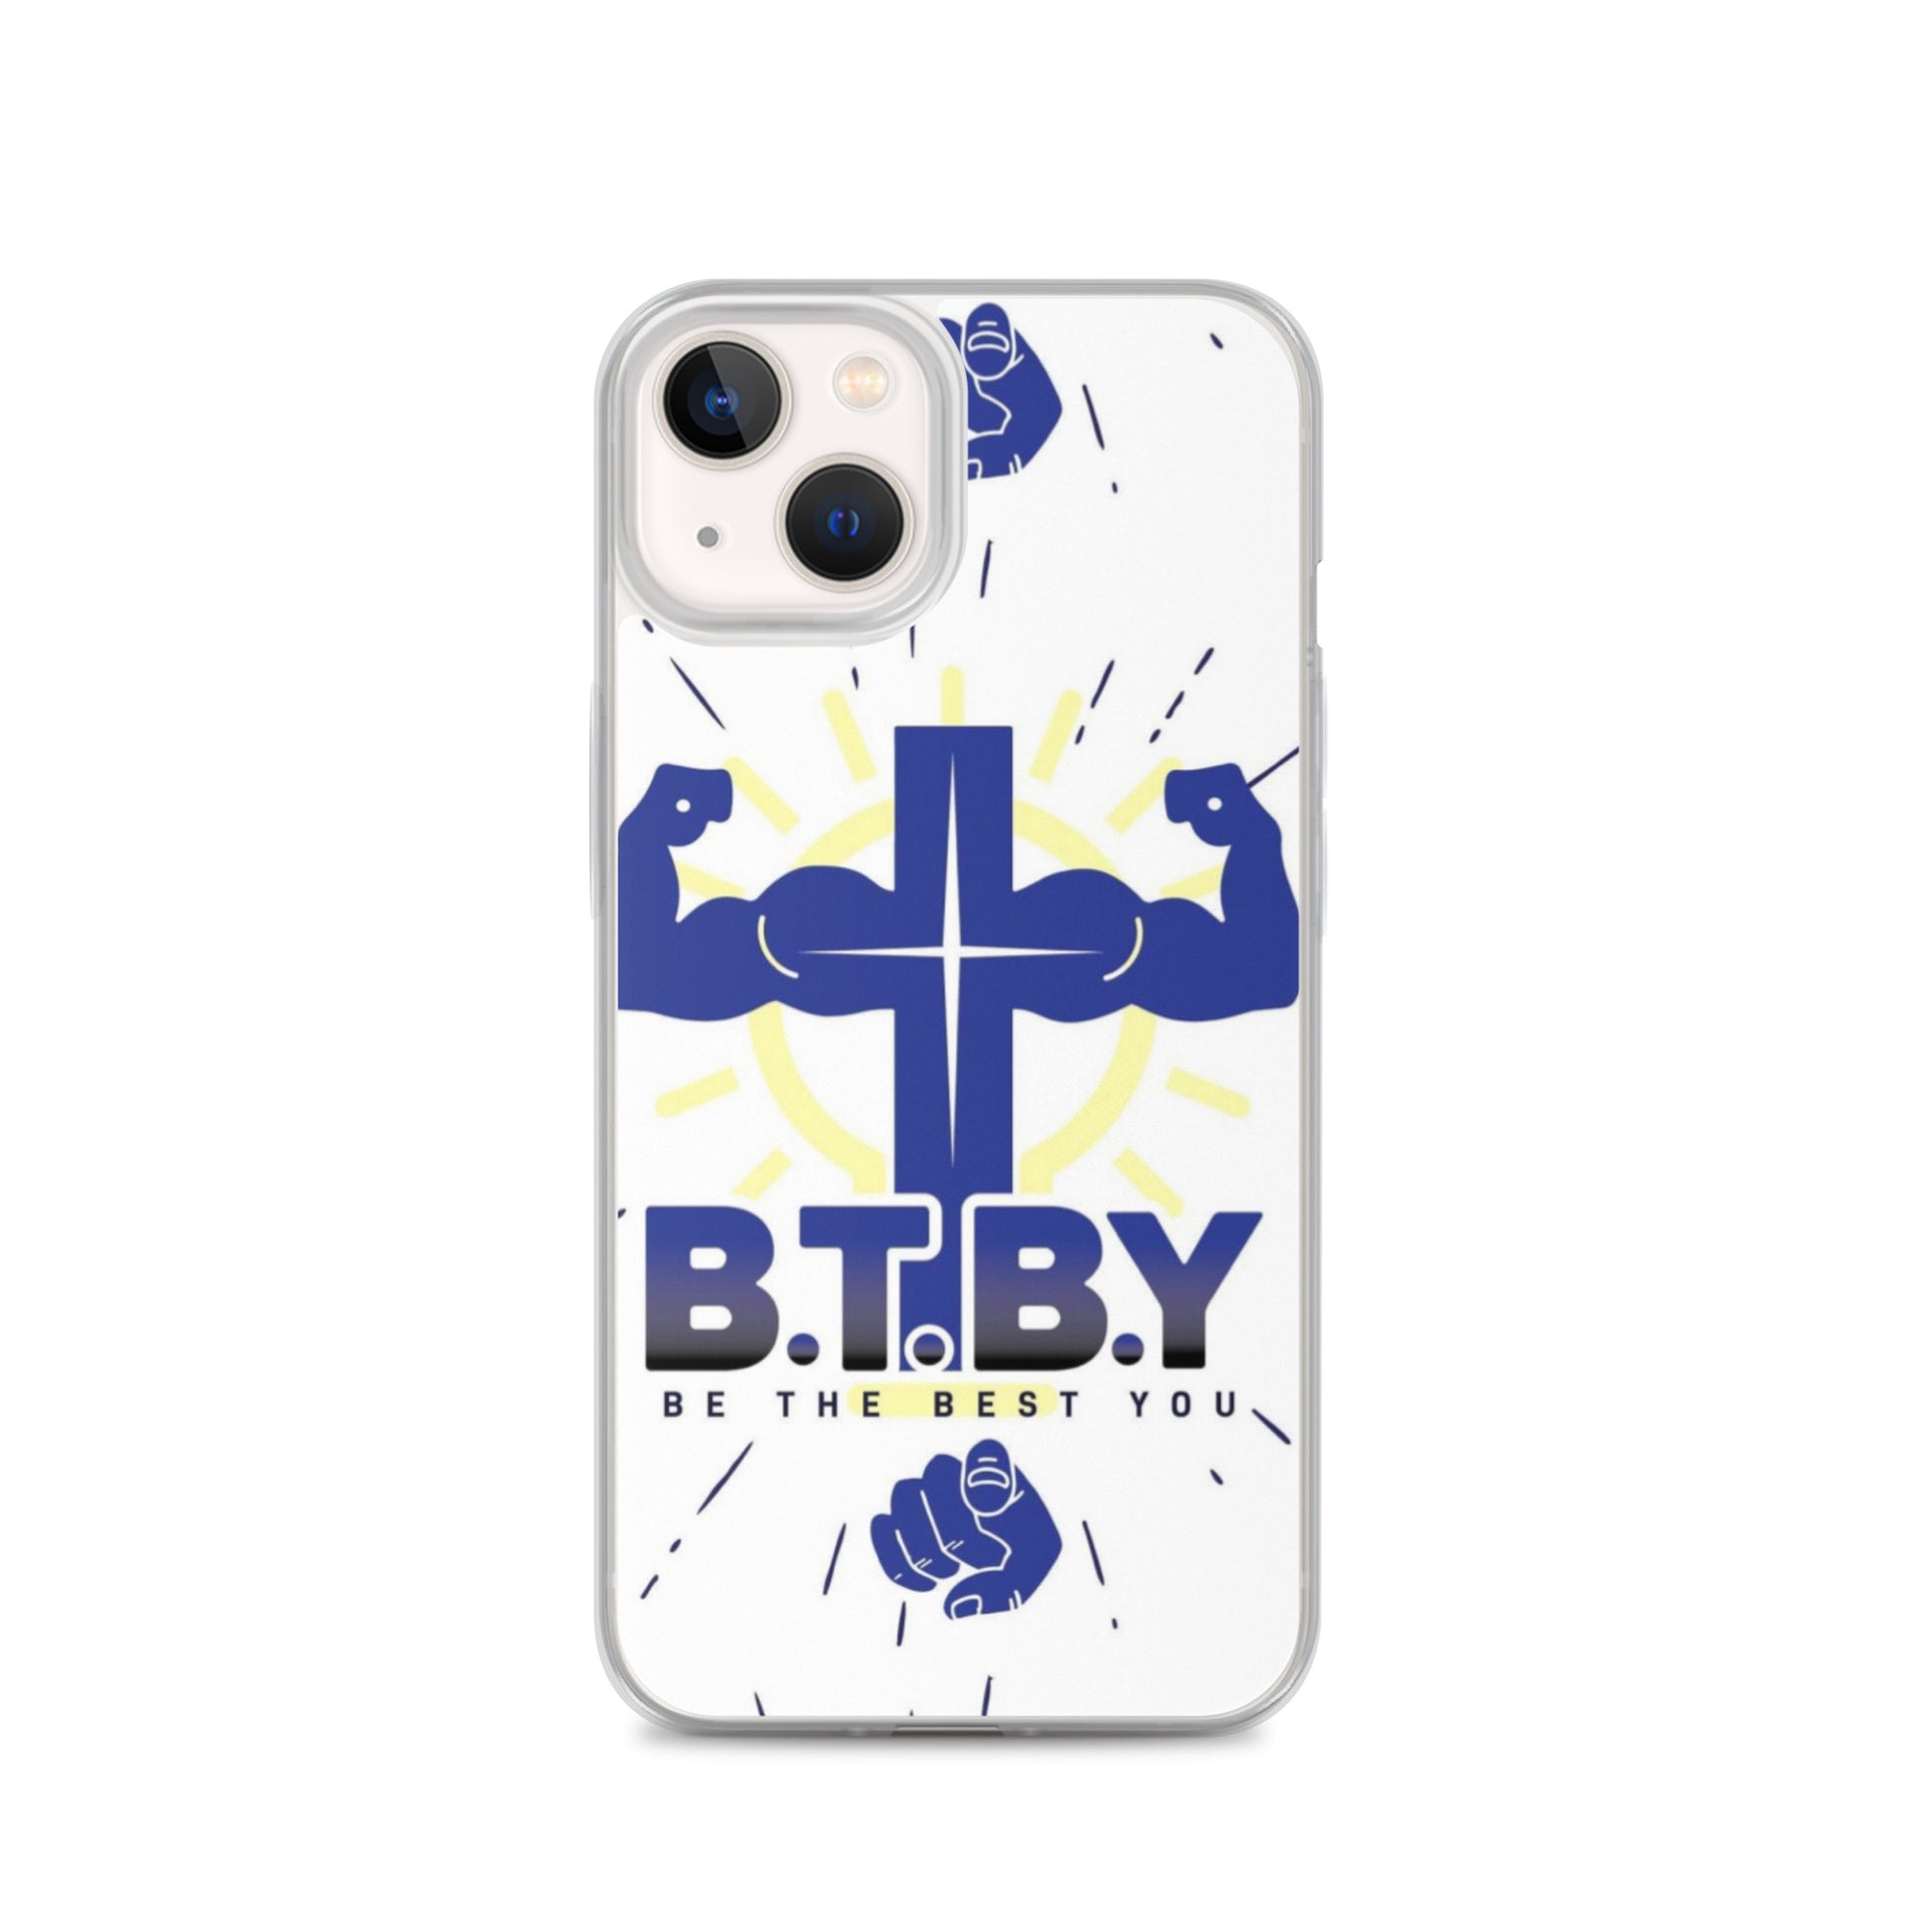 BTBY iPhone Case - BTBYstore